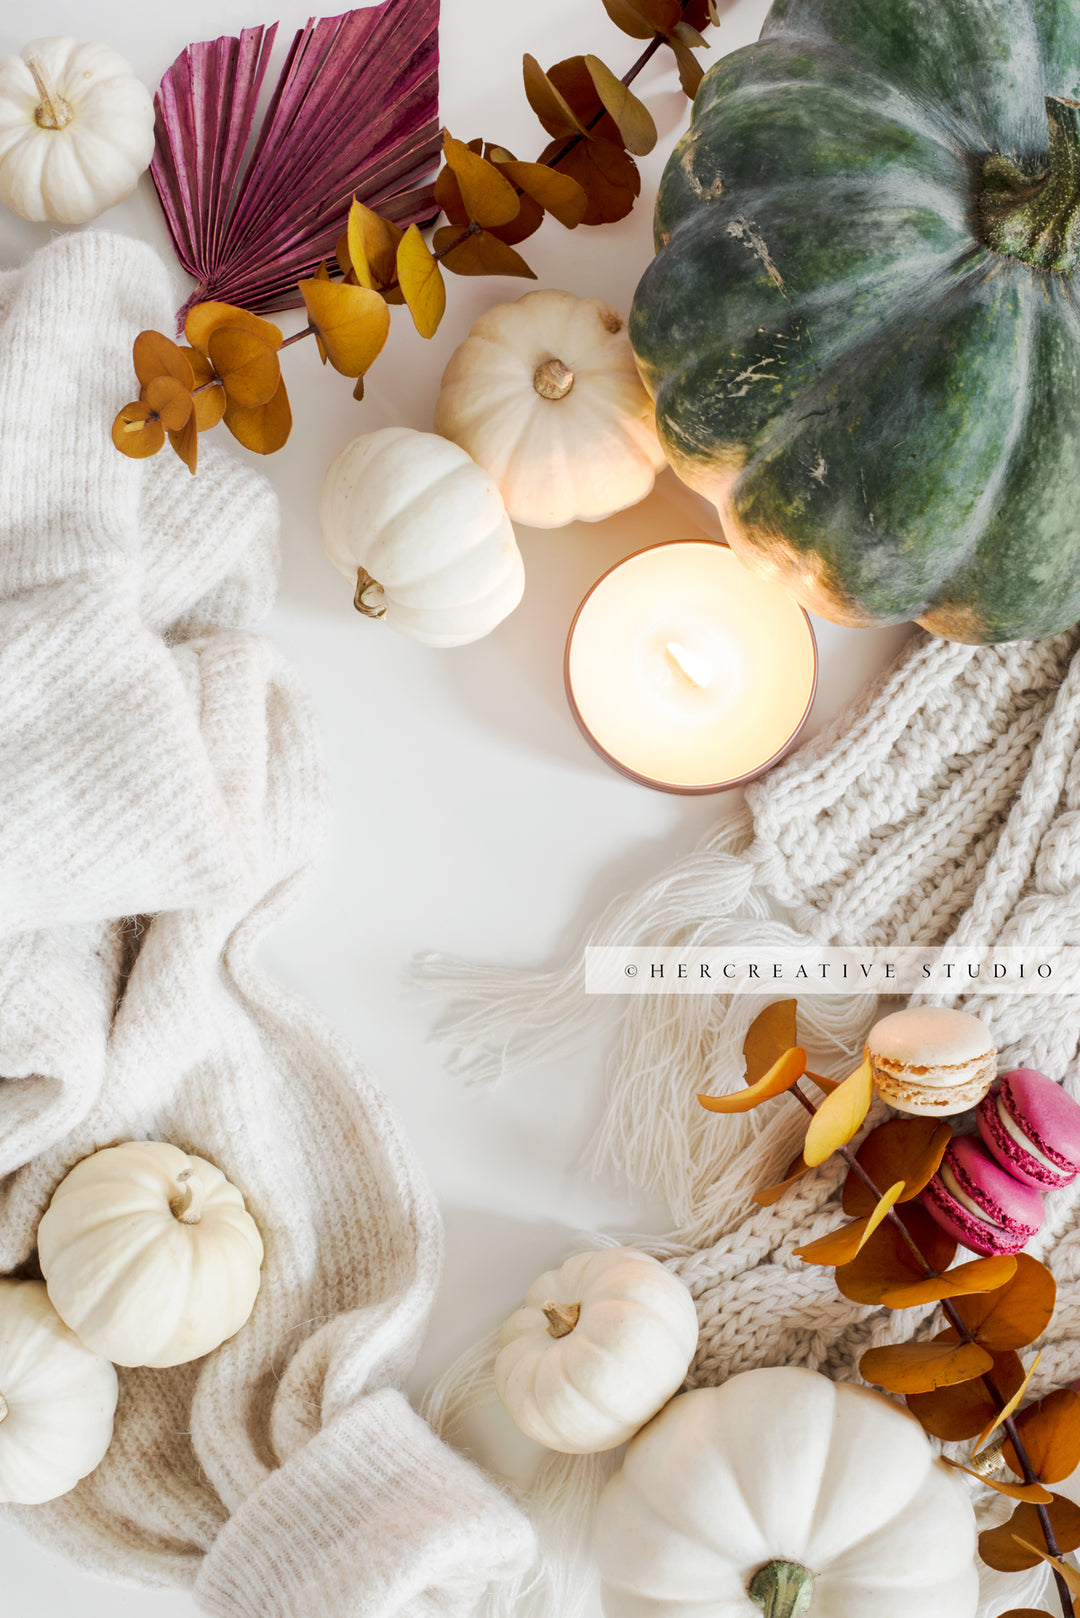 Candle, Macarons & Fall Pumpkins. Digital Stock Image.